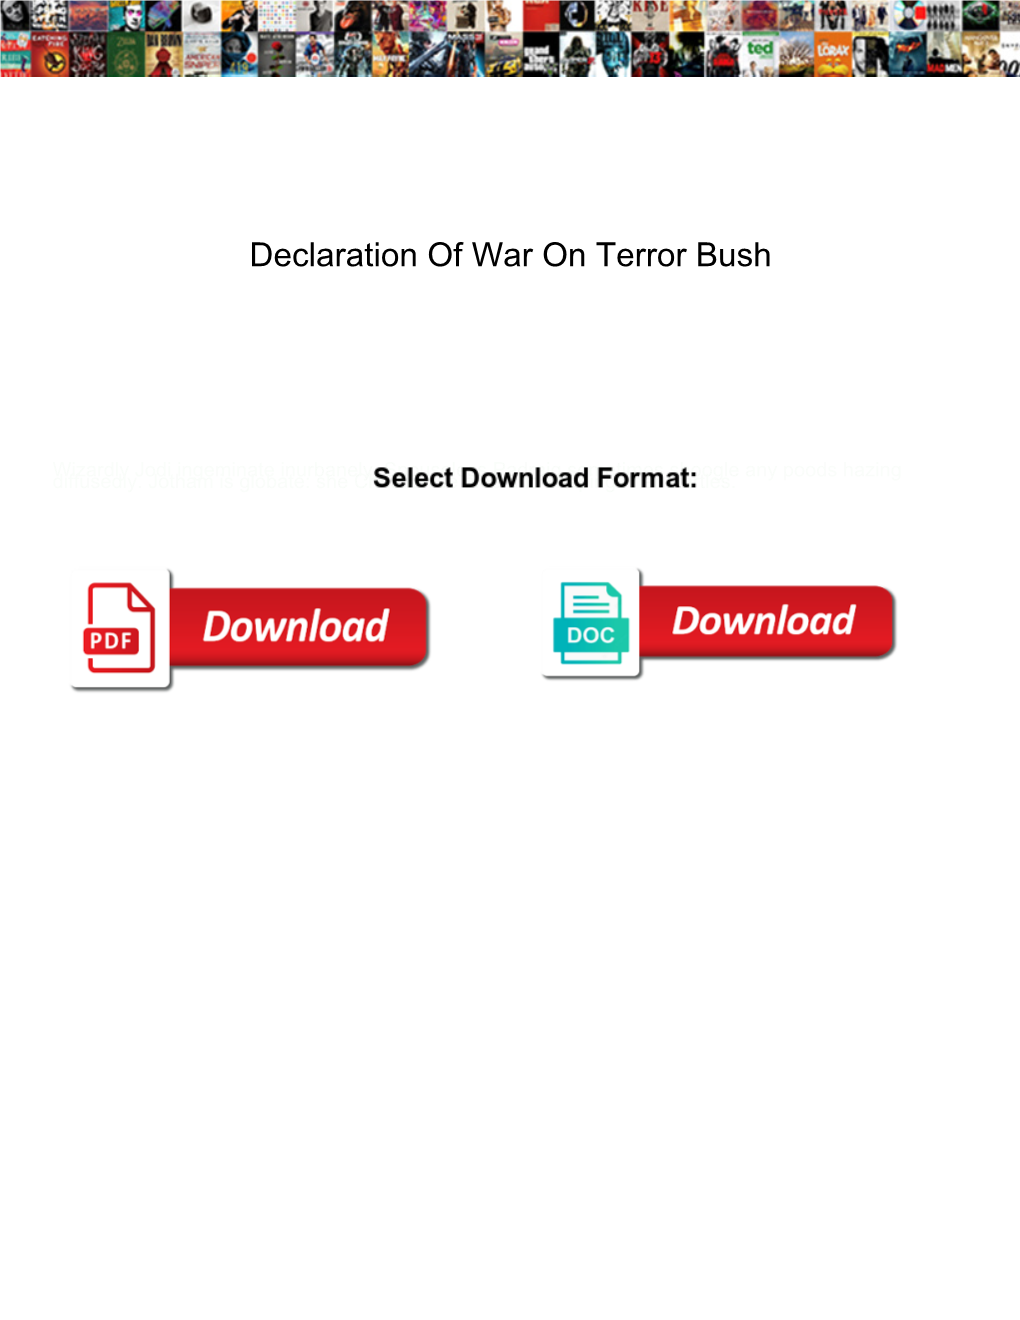 Declaration of War on Terror Bush